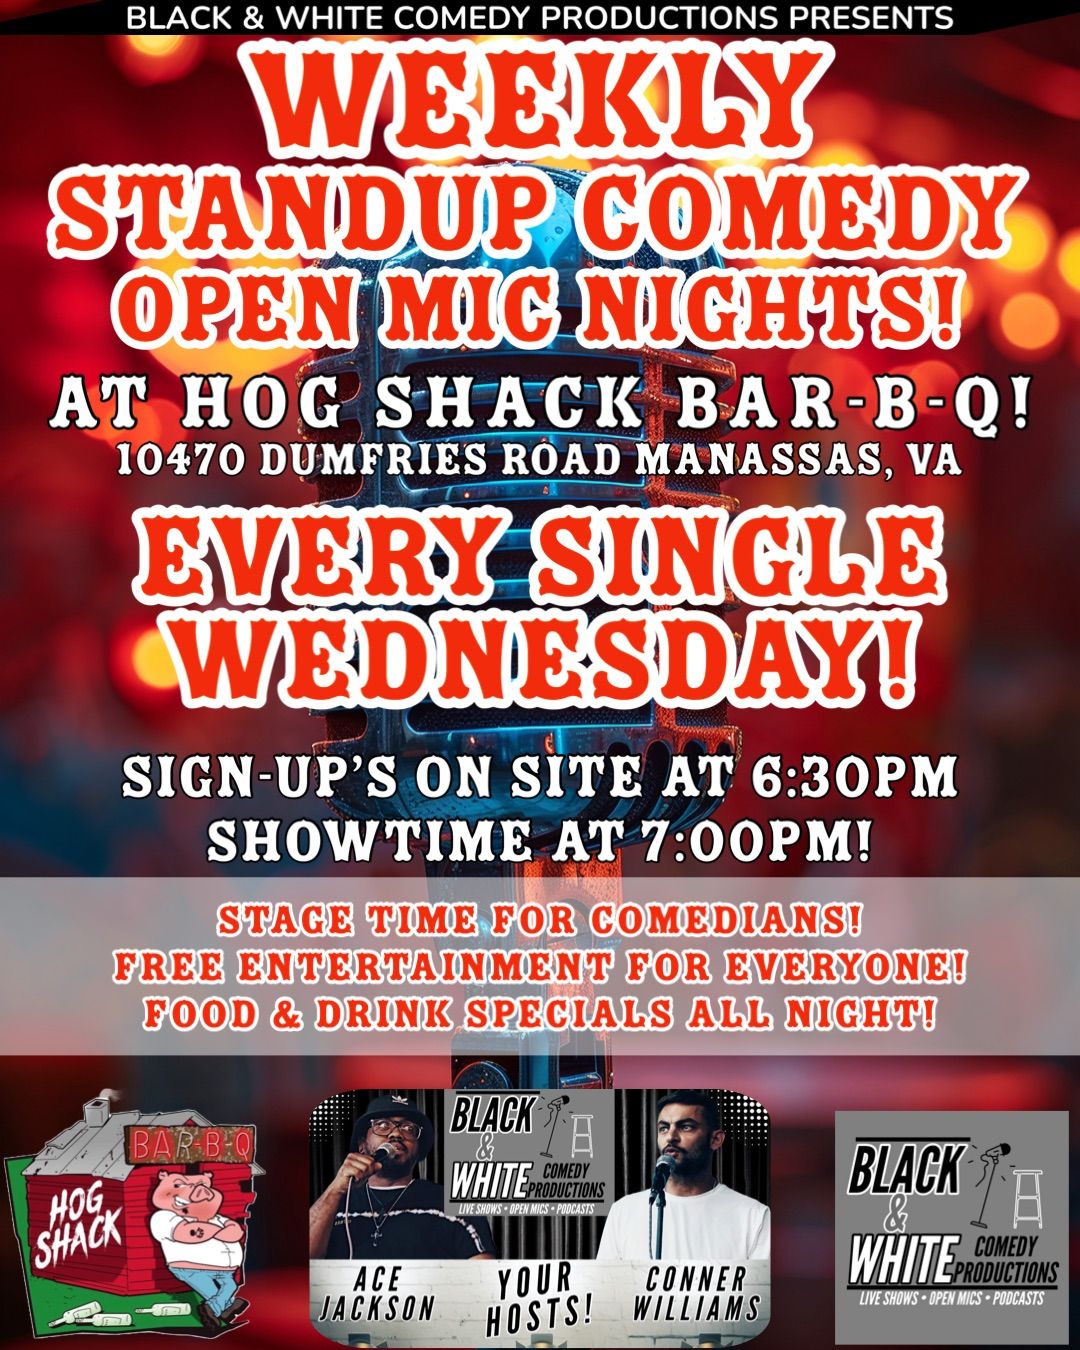 WEEKLY Standup Comedy Open Mic Night! At Hog Shack Bar-B-Q! 